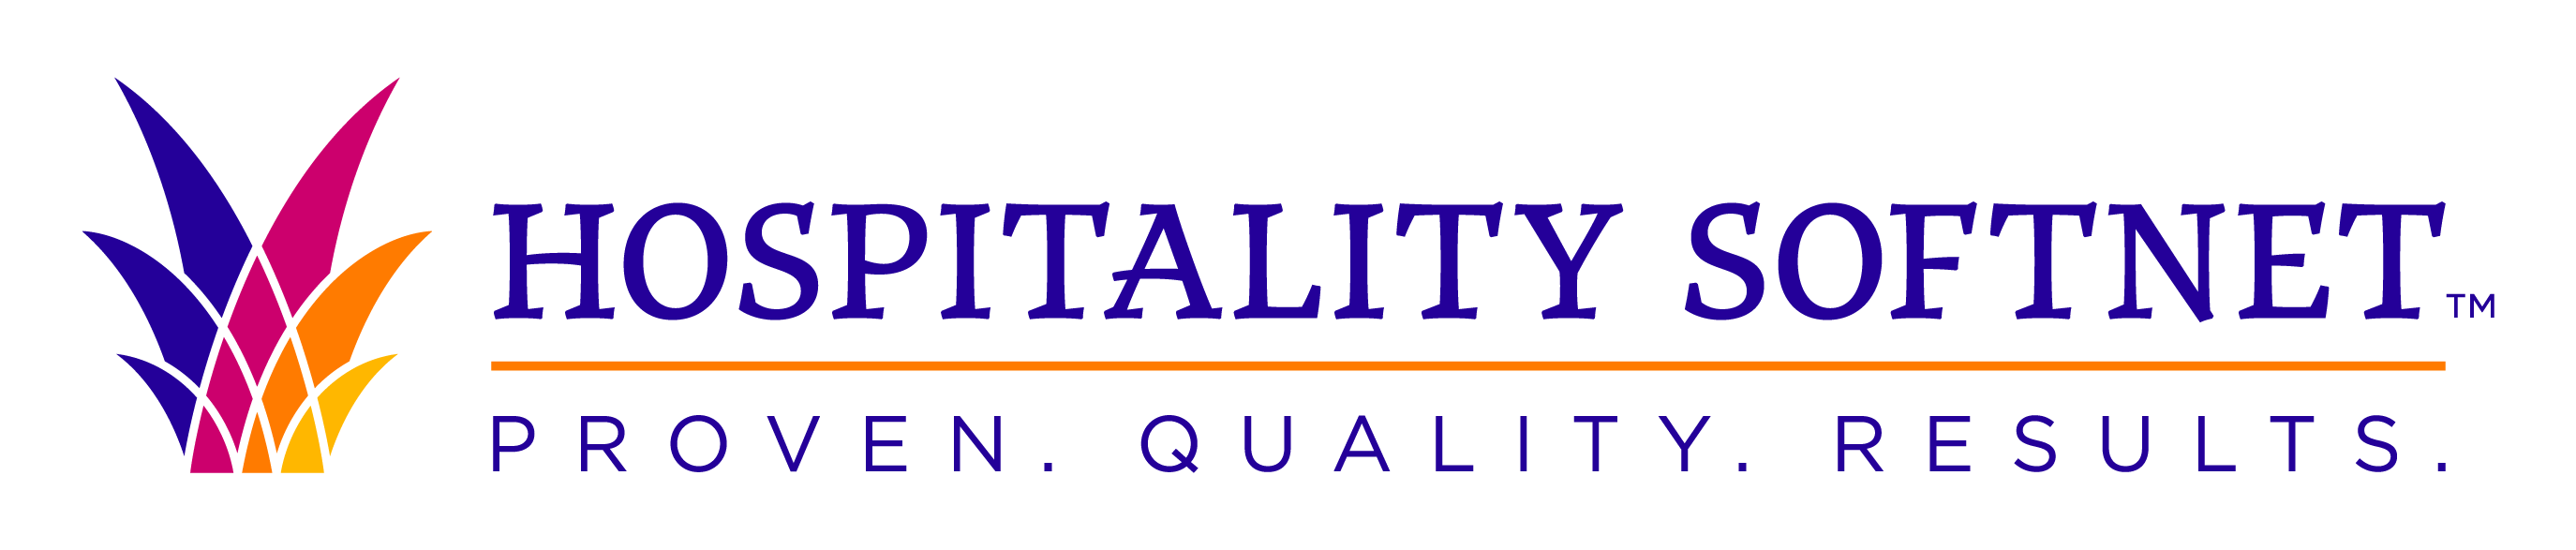 Logo for Hospitality Softnet - Providence